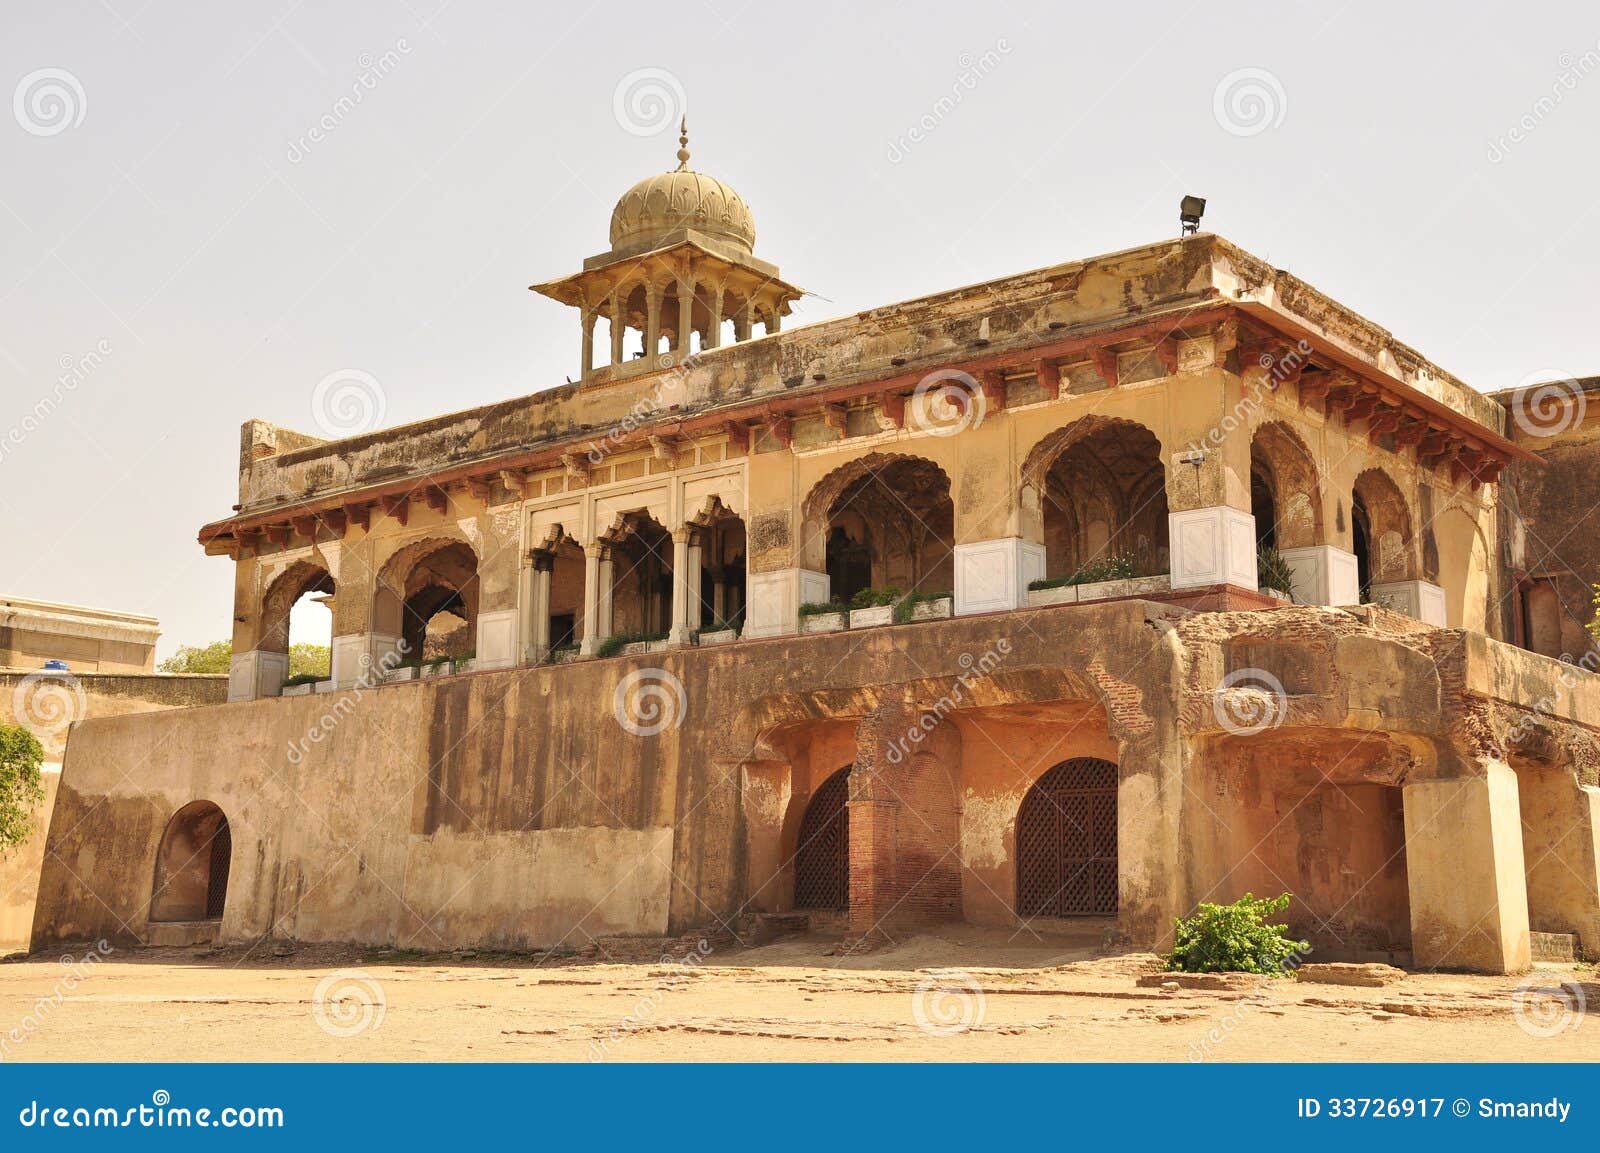 mughal-art-fort-pakistan-lahore-monument-located-eminence-northwest-corner-walled-city-citadel-33726917.jpg